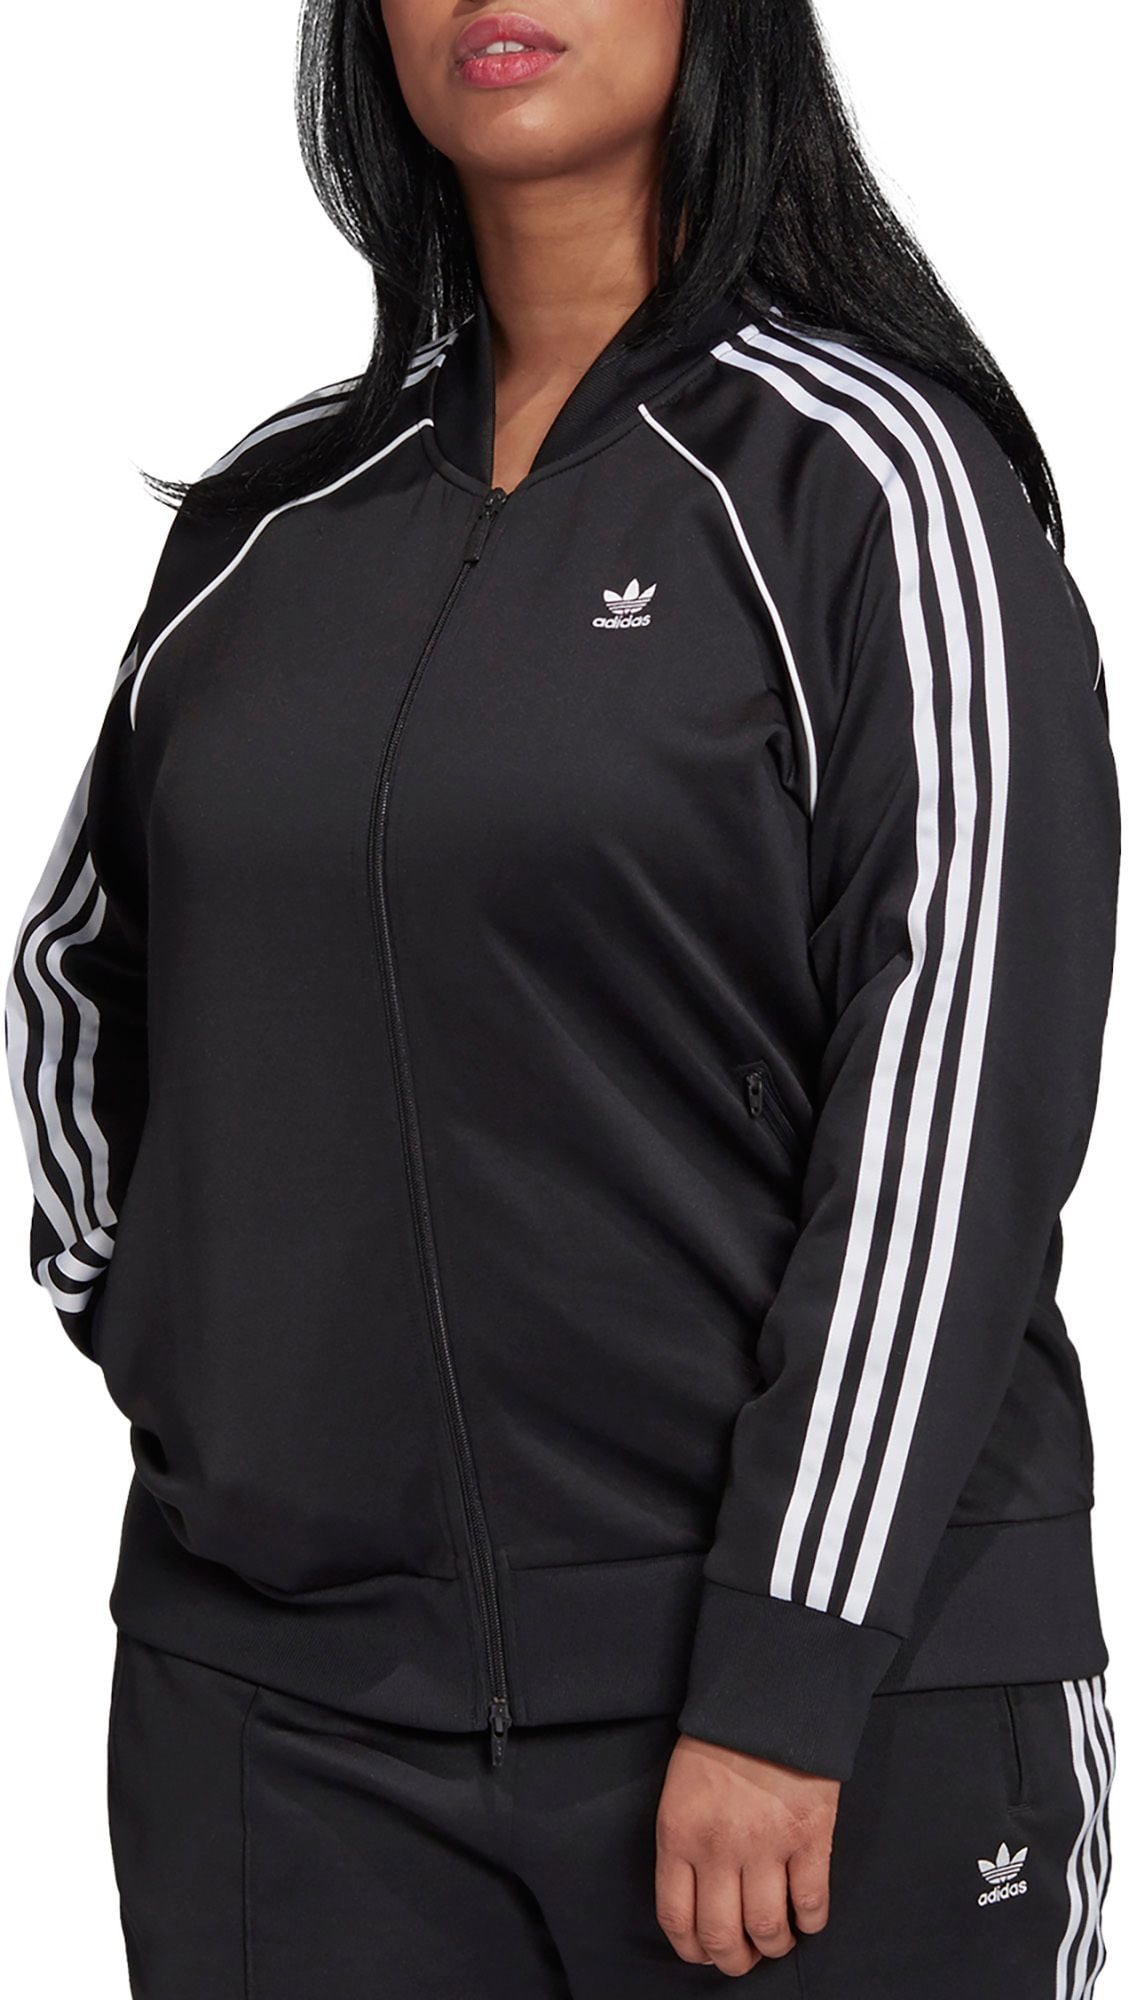 Boquilla Cuidar Arena adidas Women's Prime Blue SST Track Jacket, Black/White, S - Walmart.com